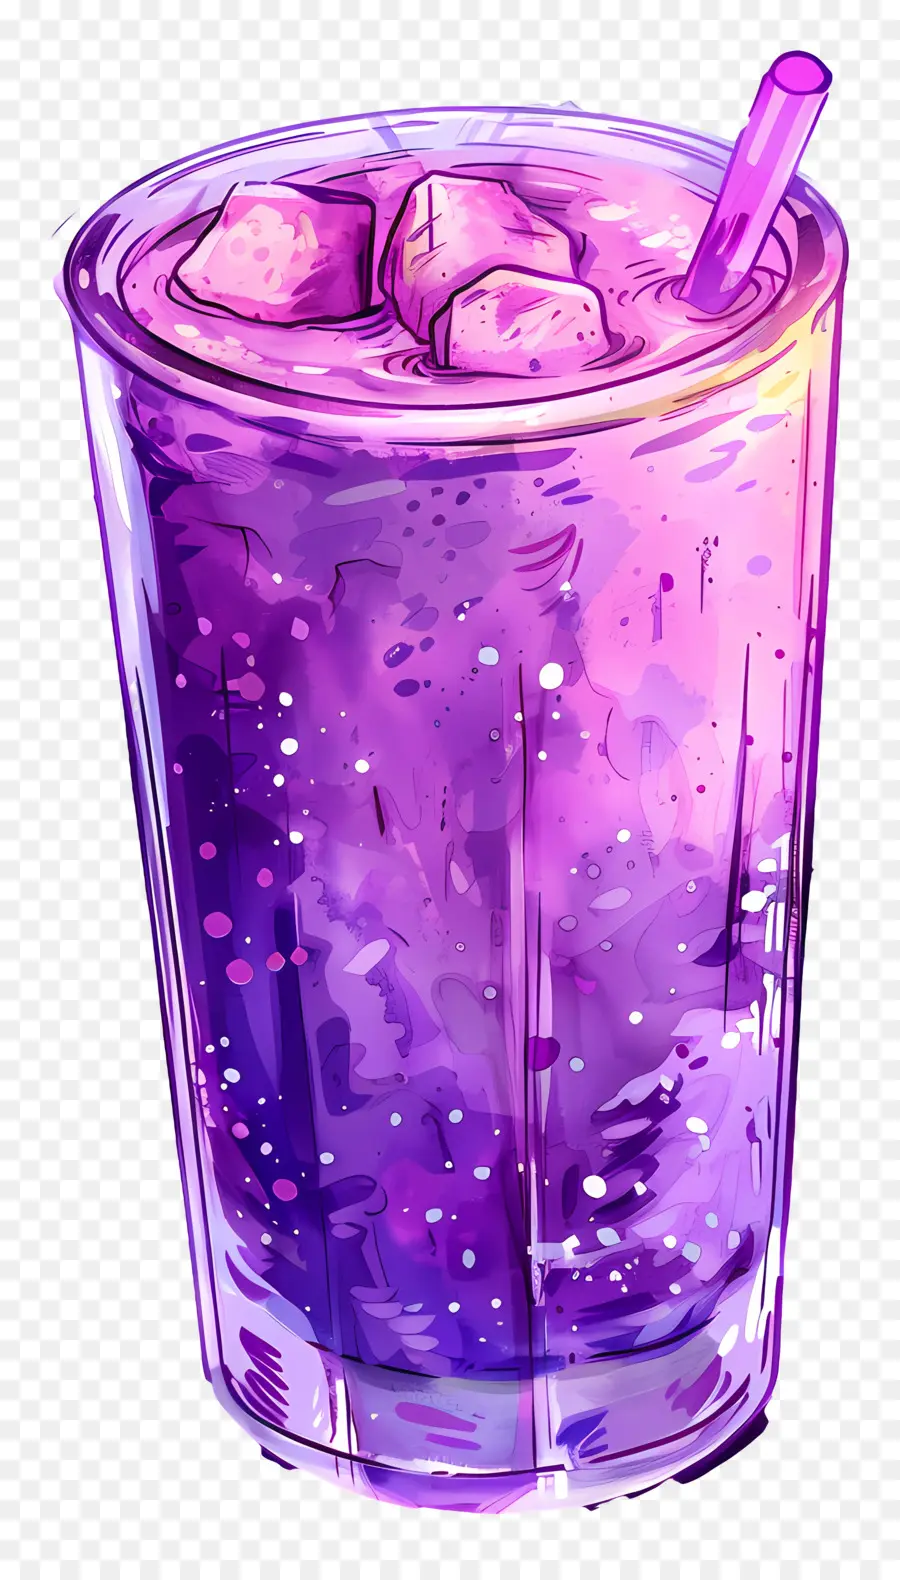 solkadhi drink purple drink juice soda ice cubes